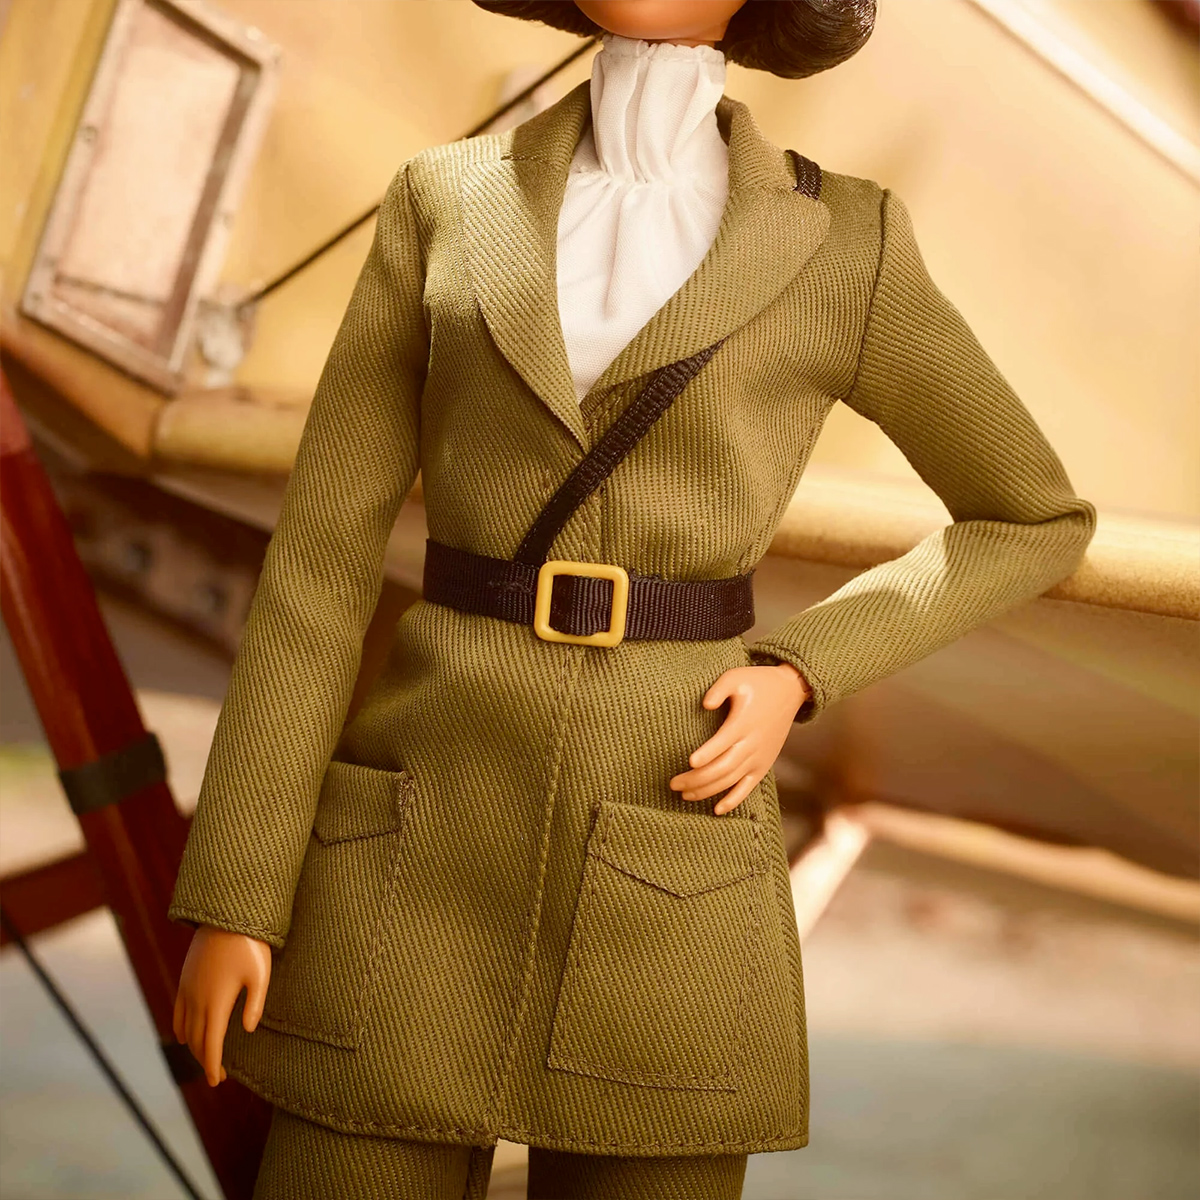 Bessie Coleman Barbie Signature Inspiring Women Doll